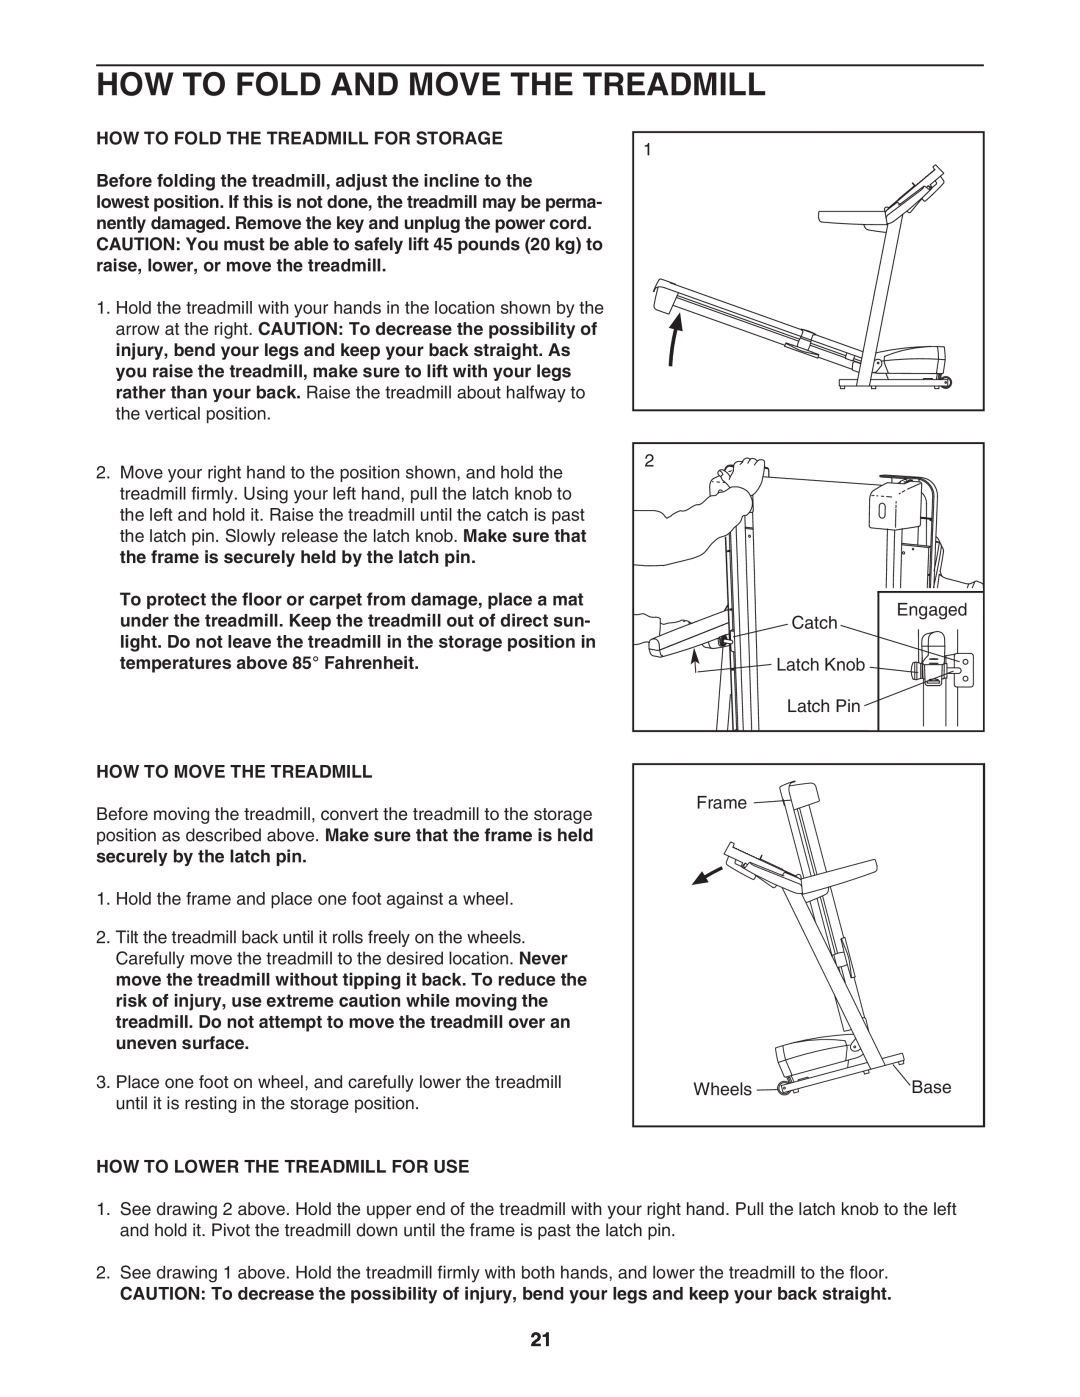 ProForm 831.29675.0 How To Fold And Move The Treadmill, How To Fold The Treadmill For Storage, How To Move The Treadmill 